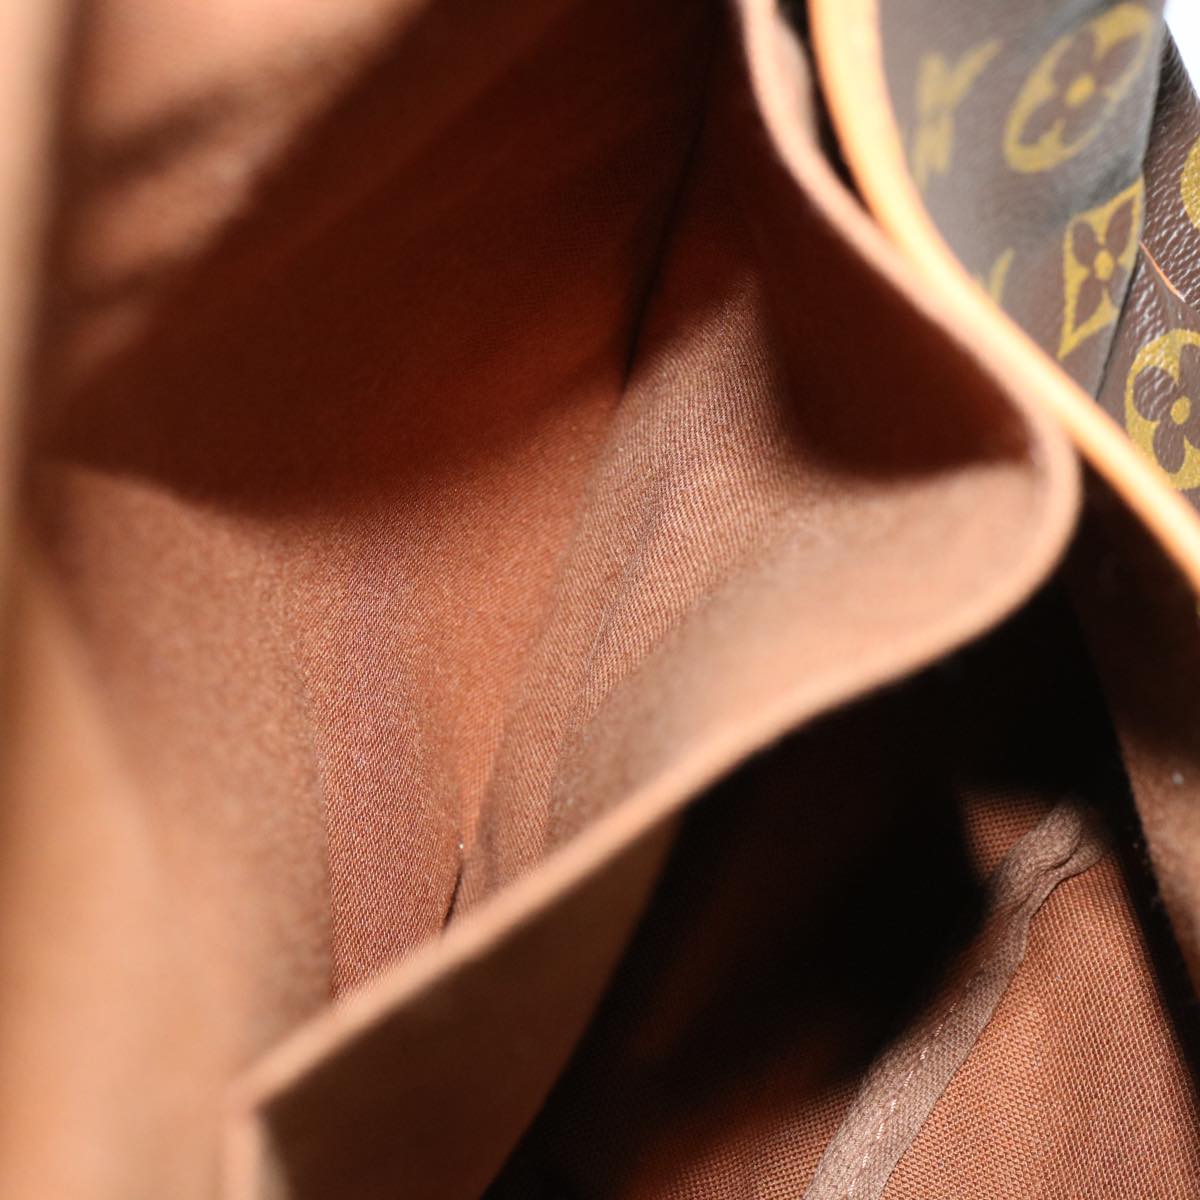 Louis Vuitton Saumur 35 Monogram Shoulder Bag